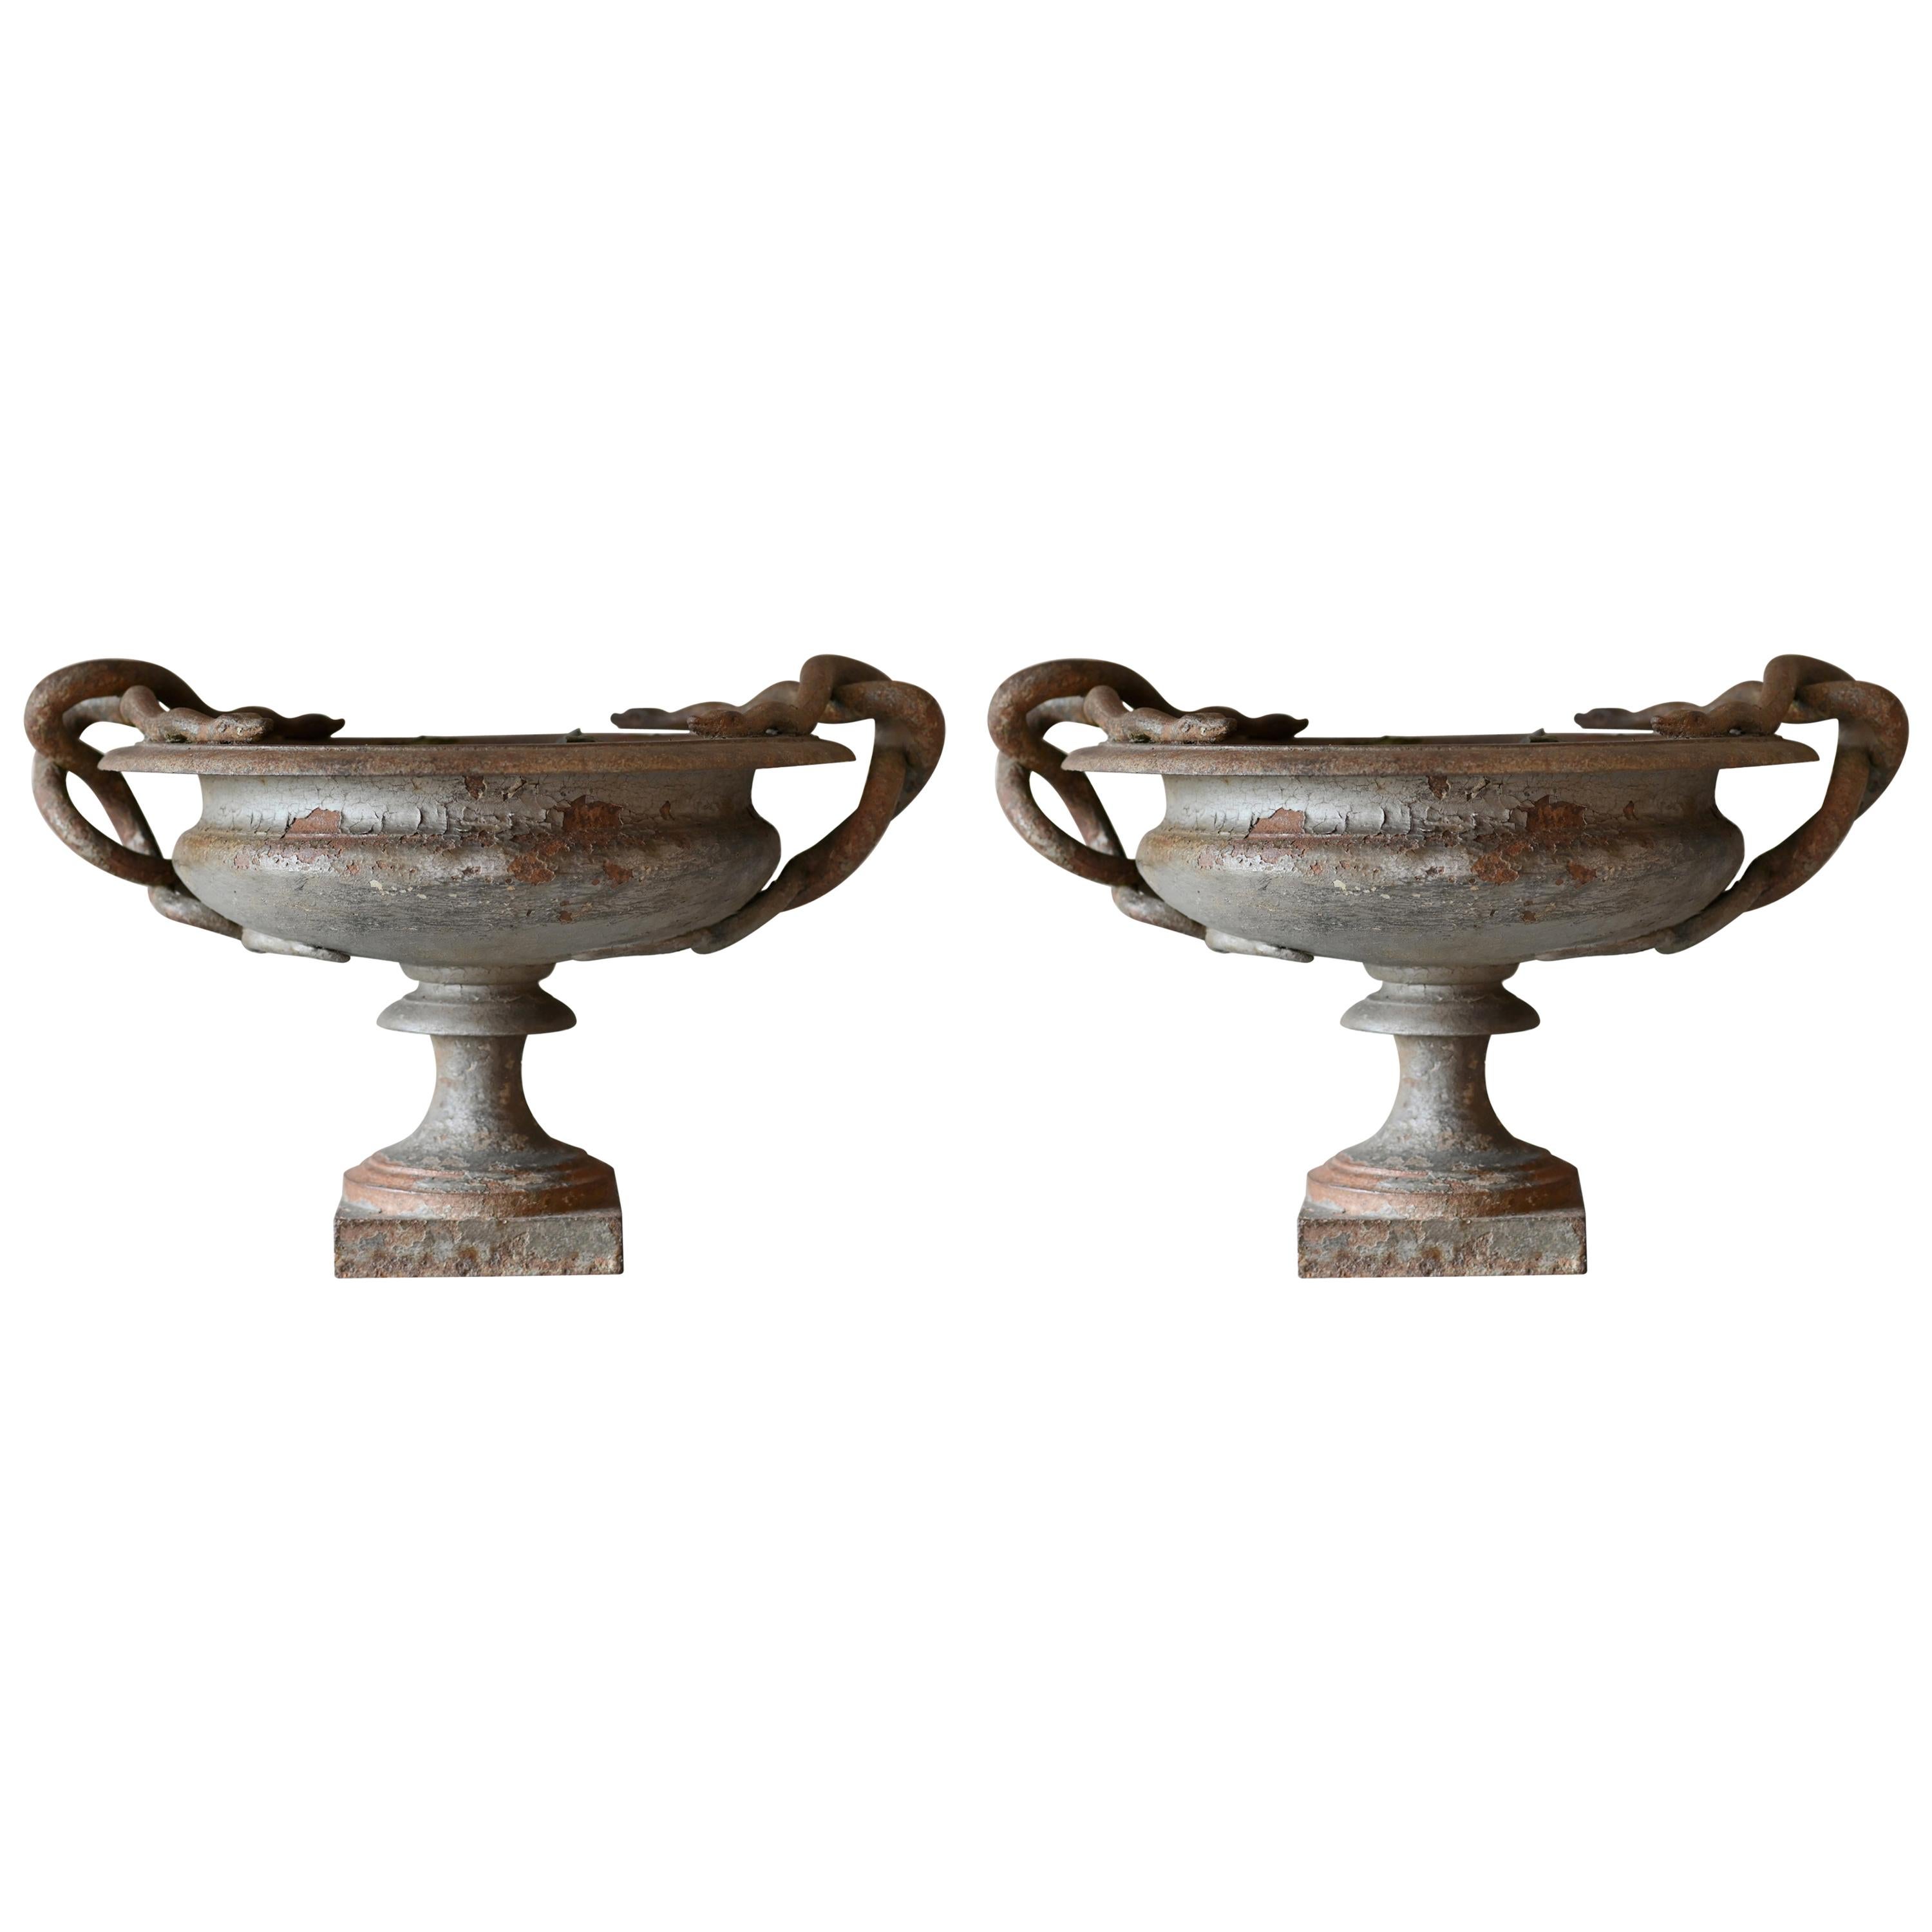 Pair of Snake Vases, Iron, French, Europe, circa 1840-1860, Snake Handles